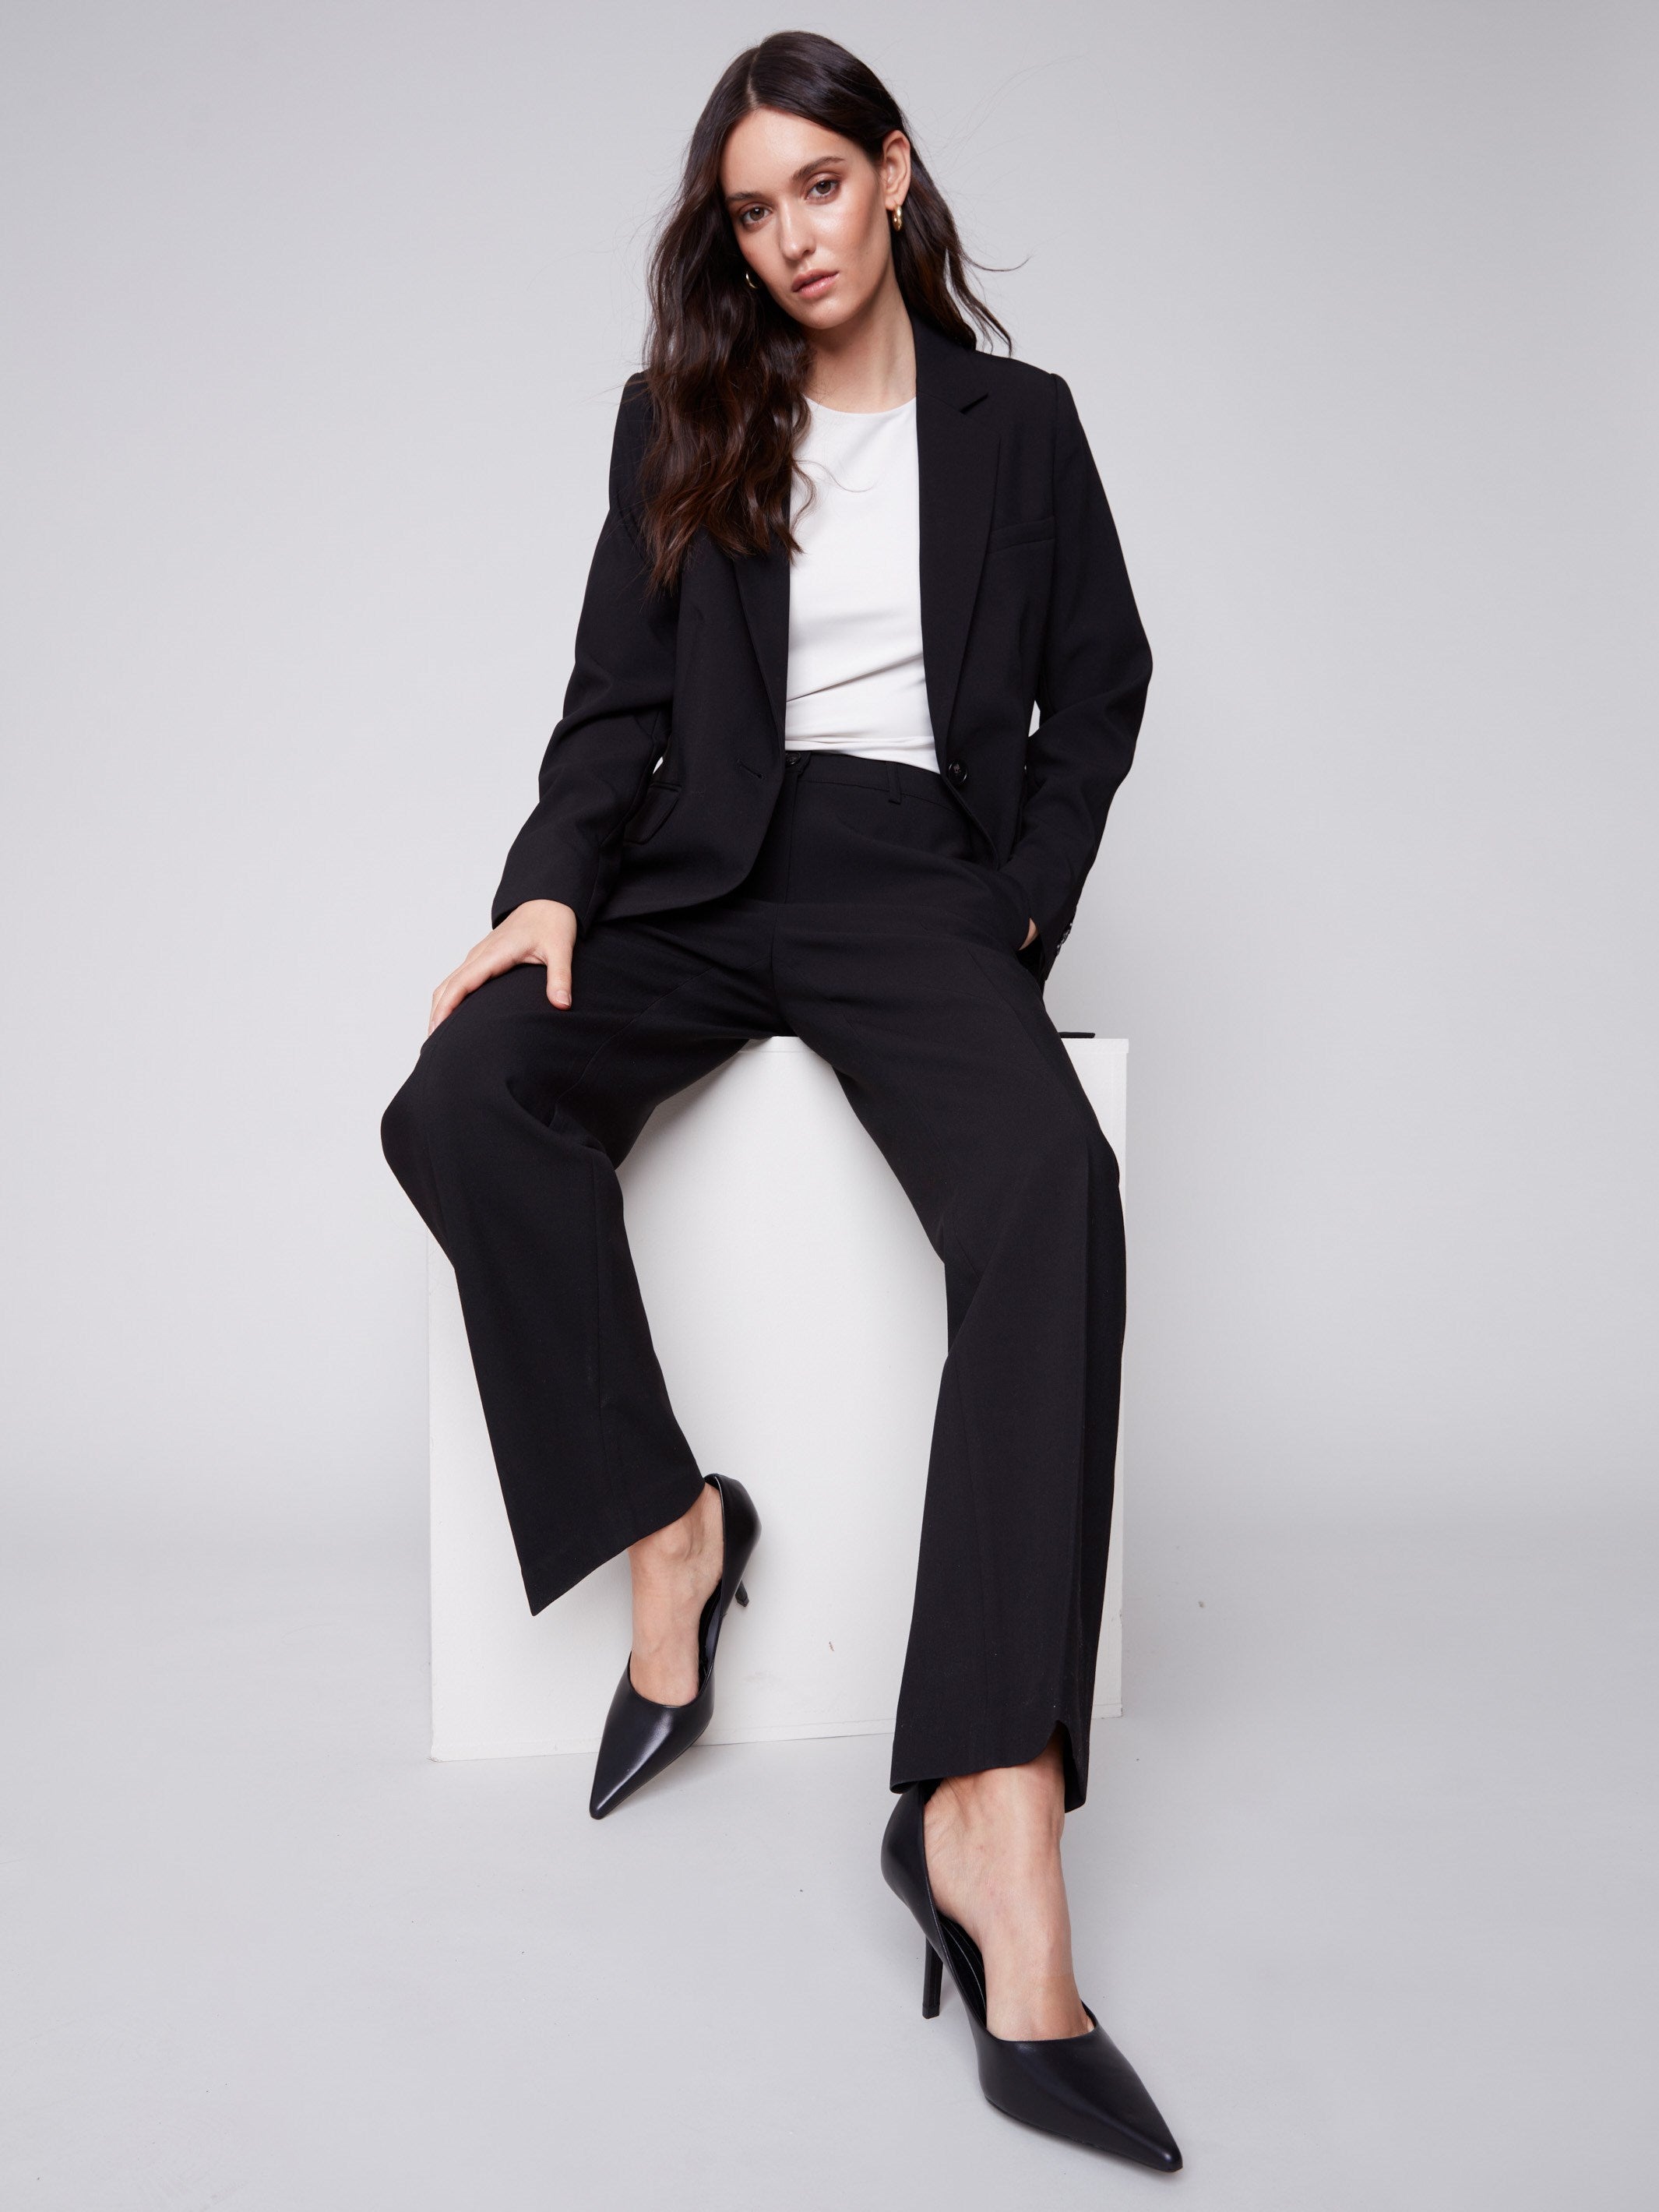 Women's Workwear Clothes | Blazers, Pants, Tops | Charlie B